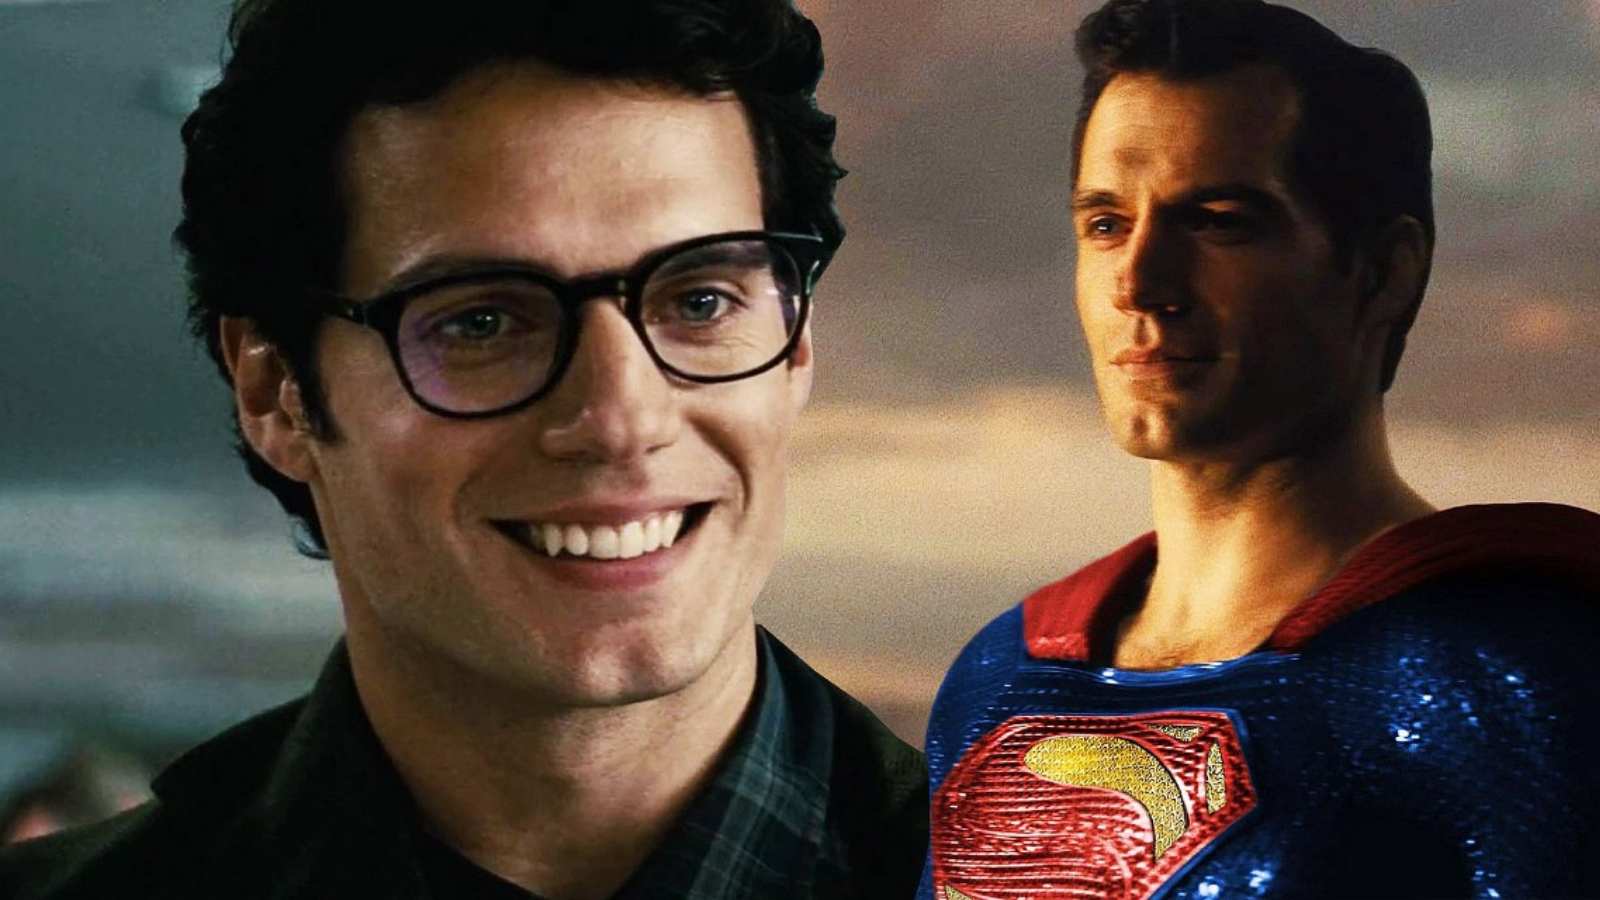 Henry Cavill: Clark Kent/ Superman from Man of Steel